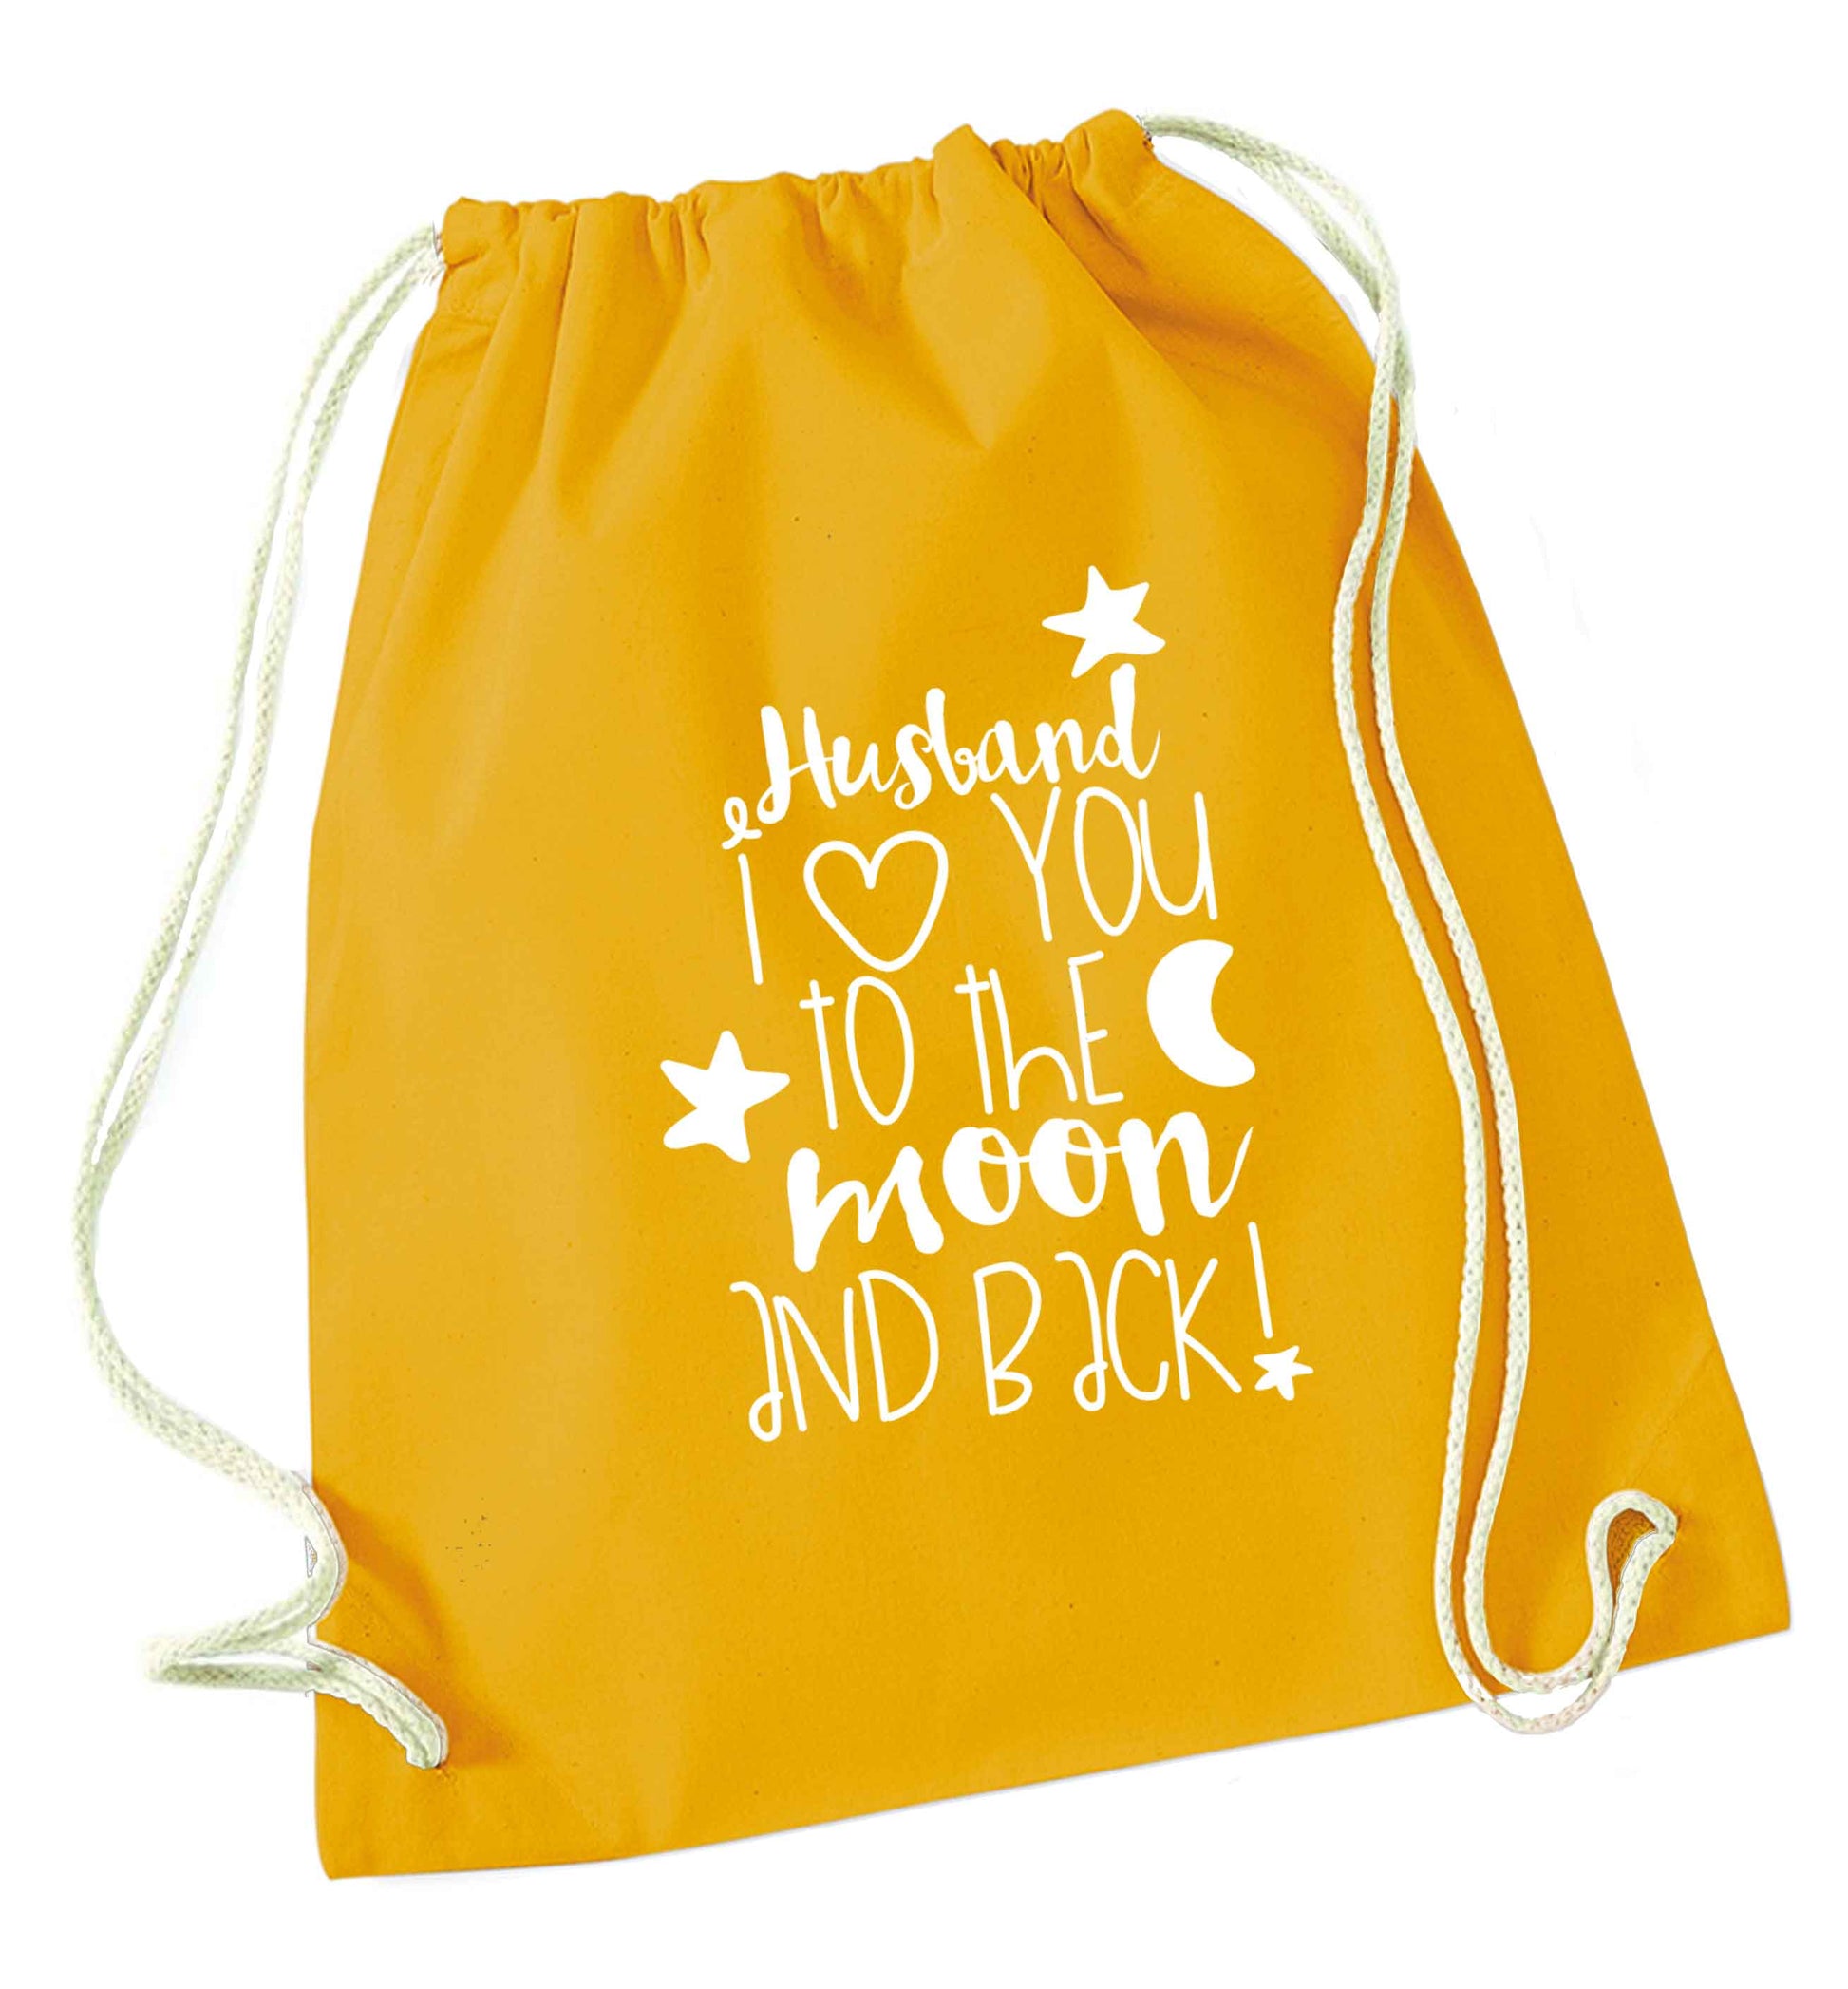 Husband I love you to the moon and back mustard drawstring bag